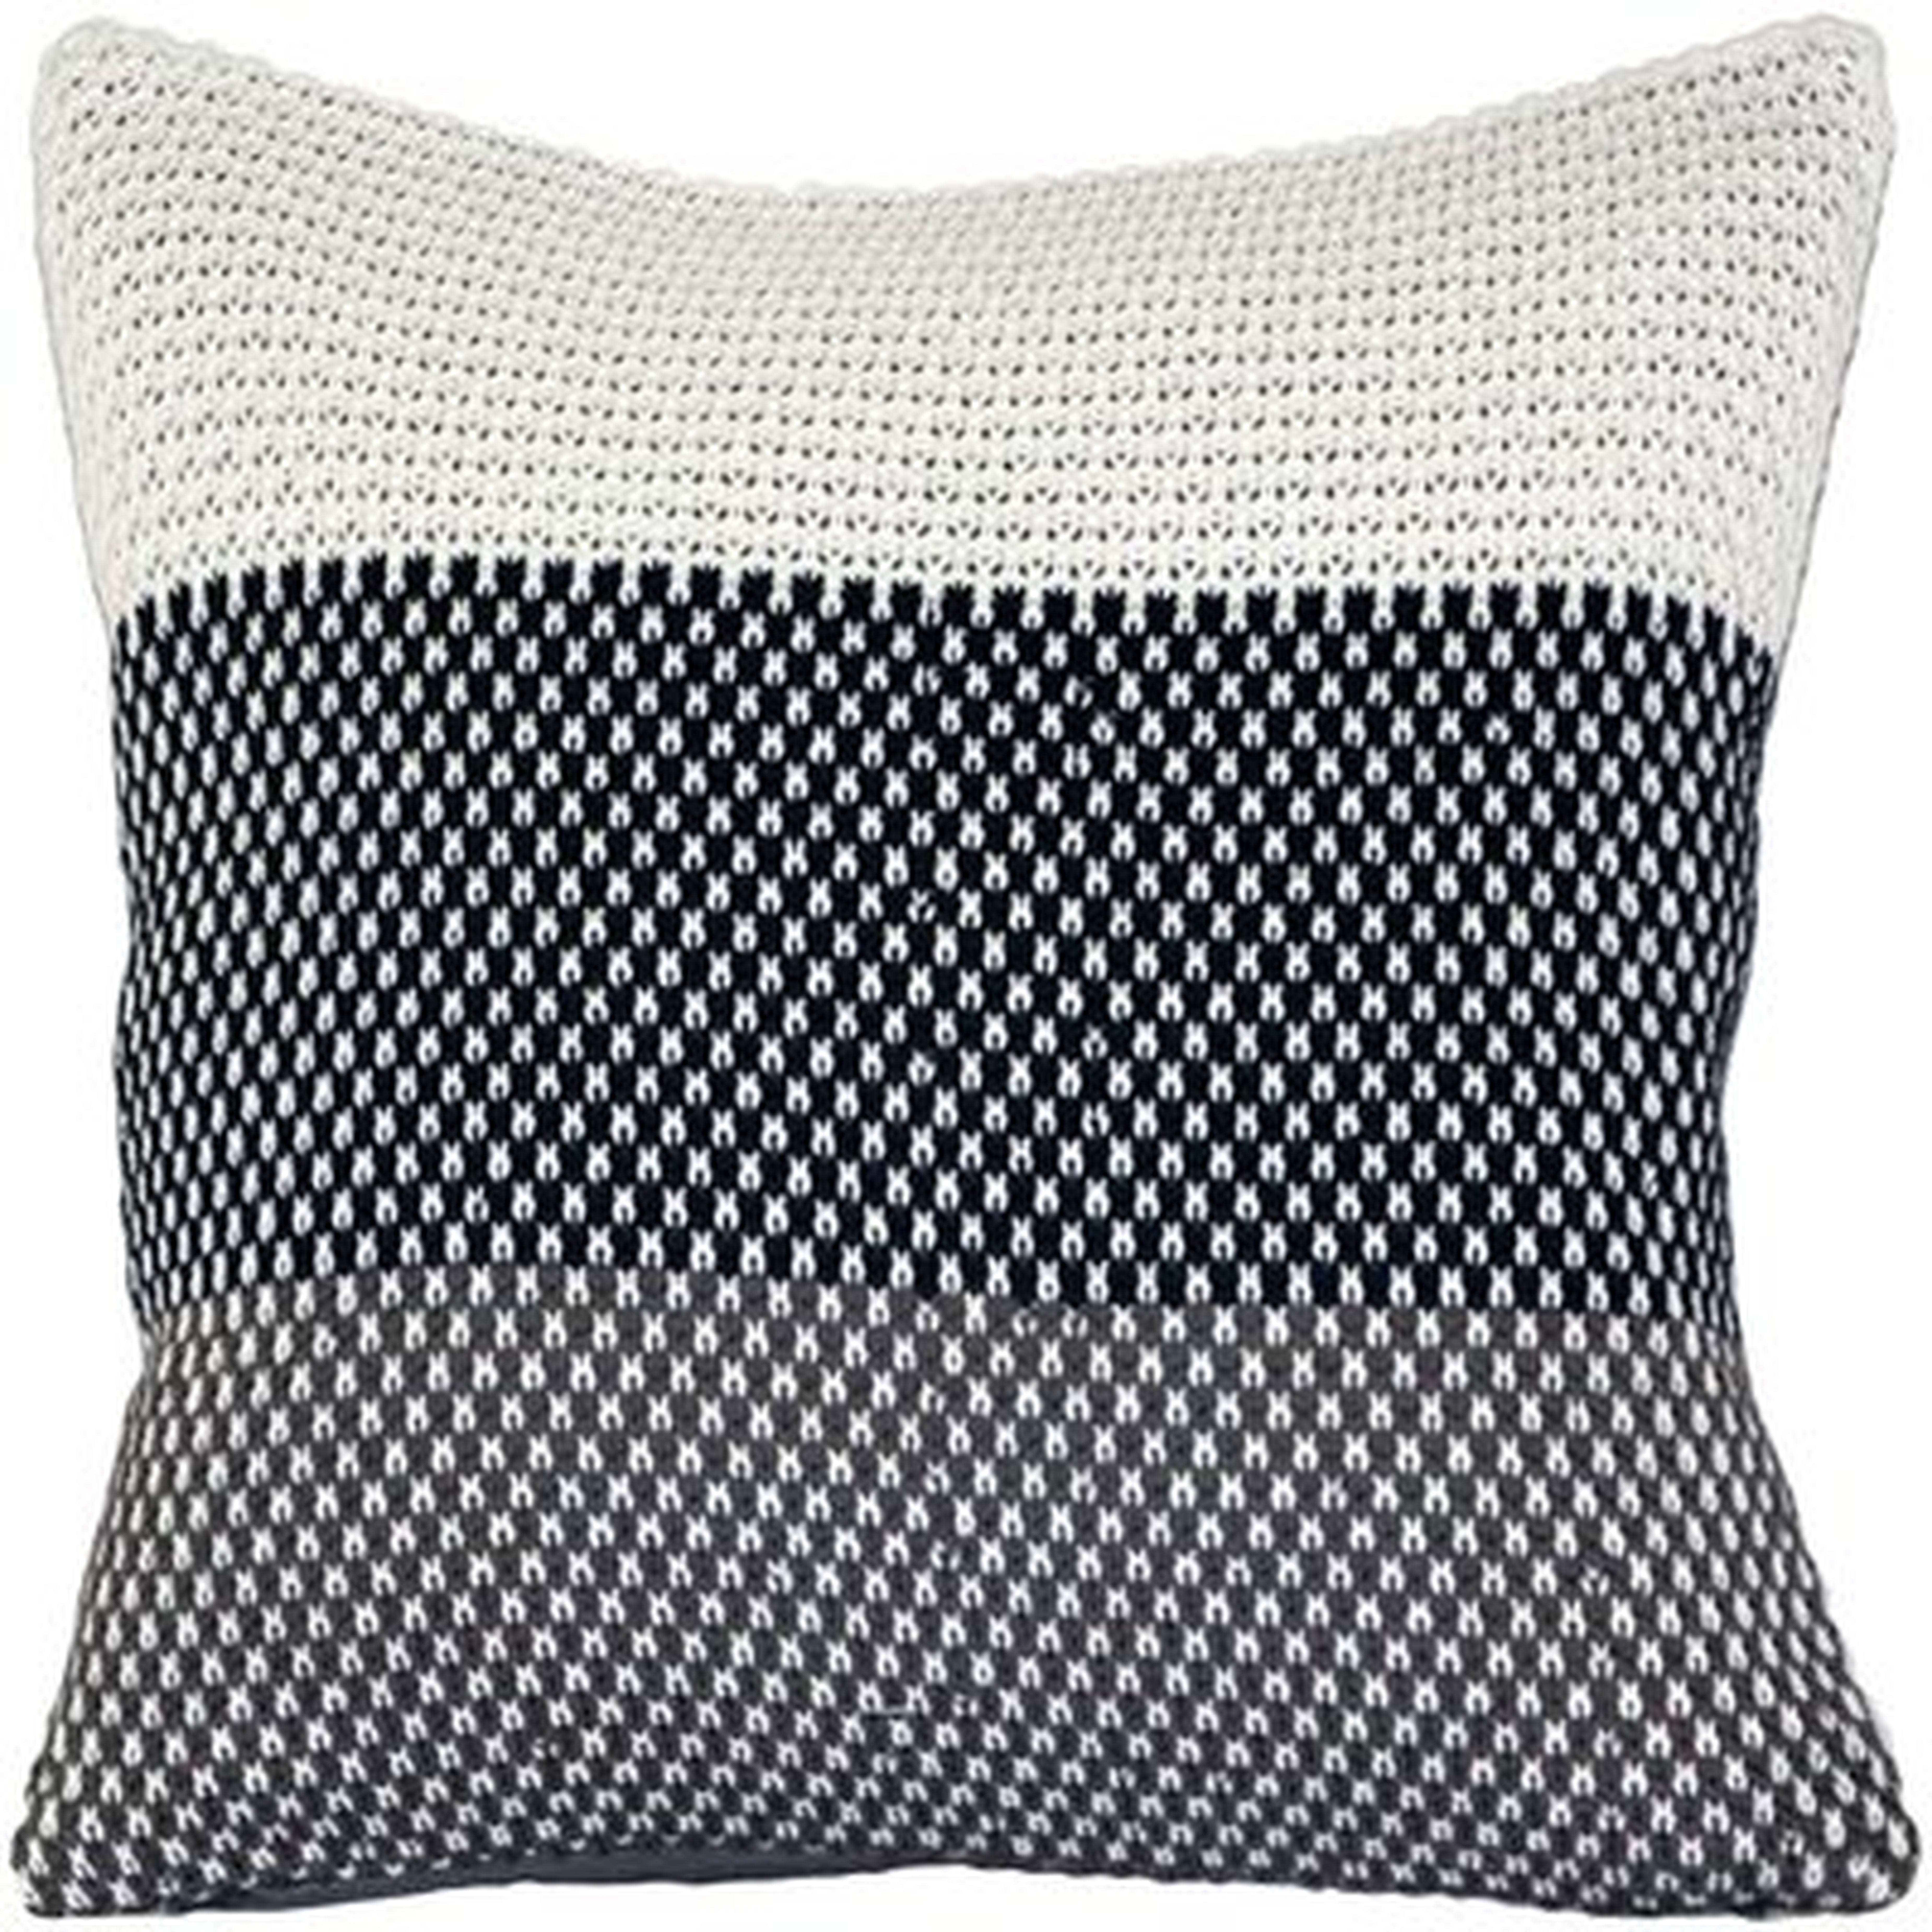 Ariel Knit Throw Pillow - Wayfair